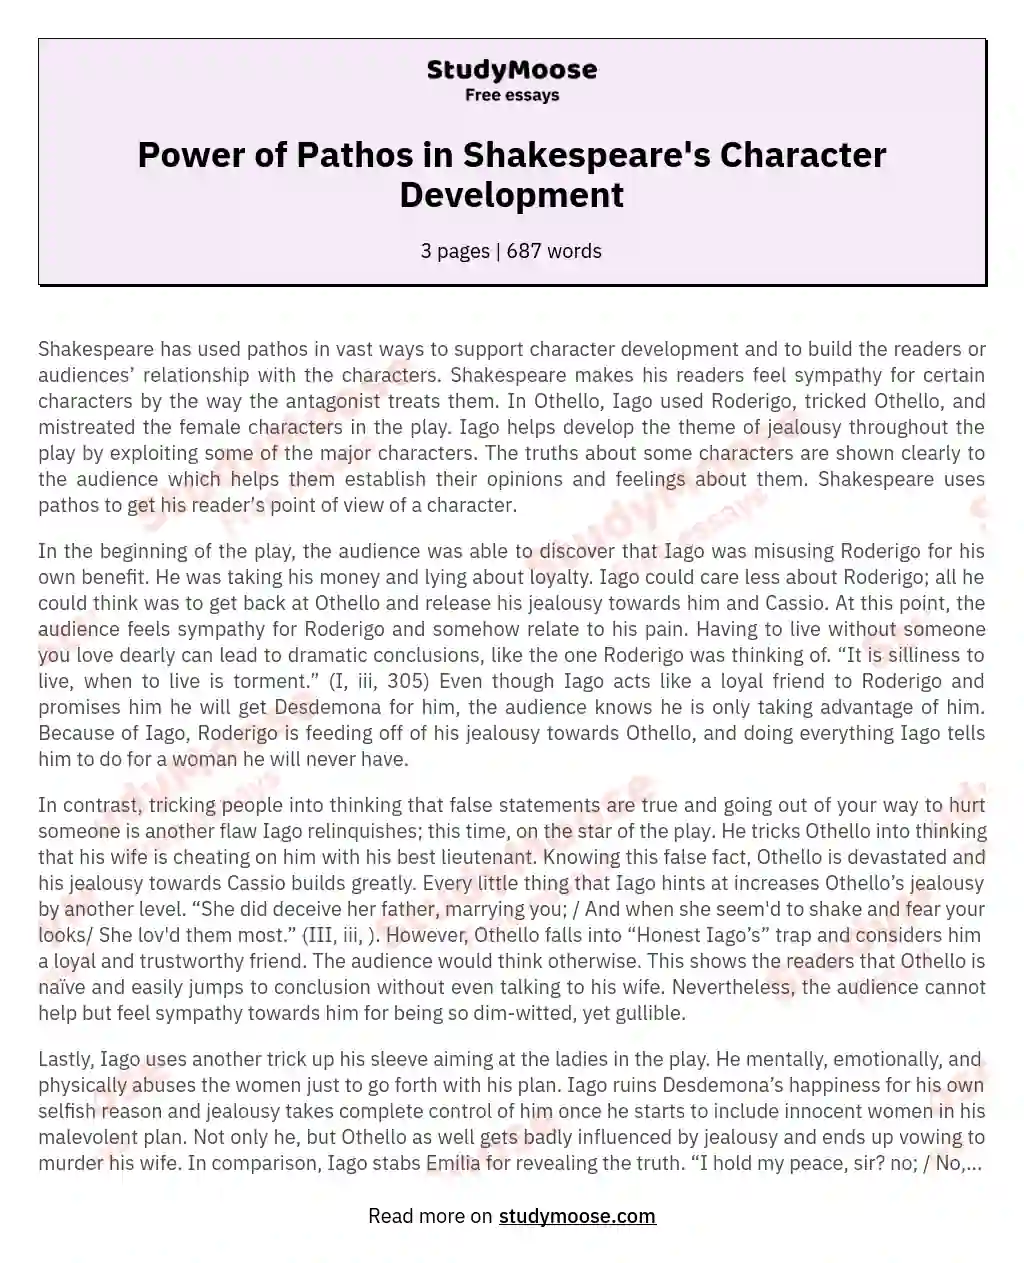 Power of Pathos in Shakespeare's Character Development essay